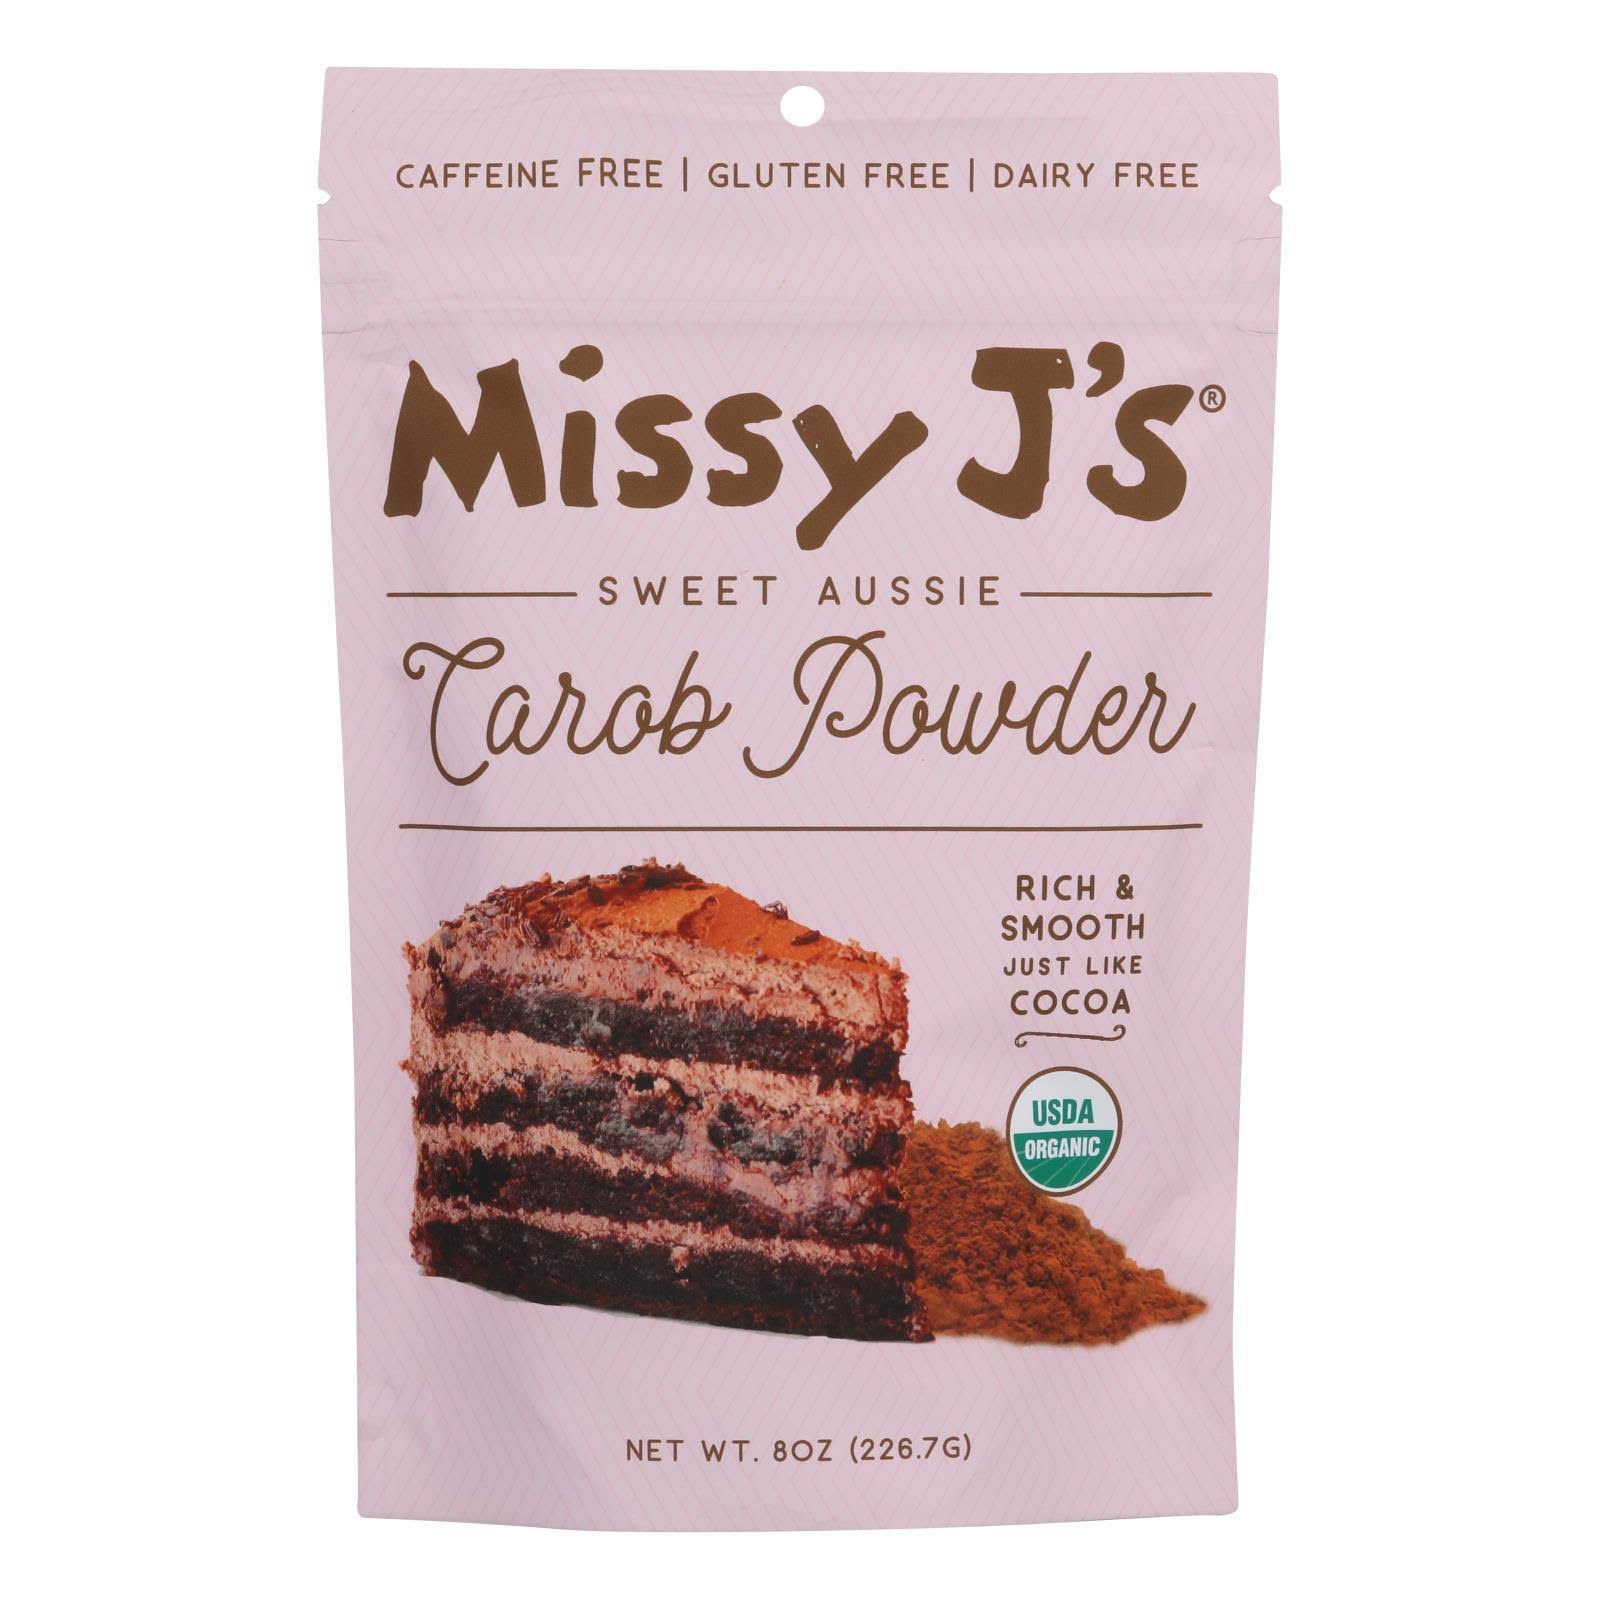 Missy JS - Carob Powder Og2 Vegan - CS of 6-8 oz